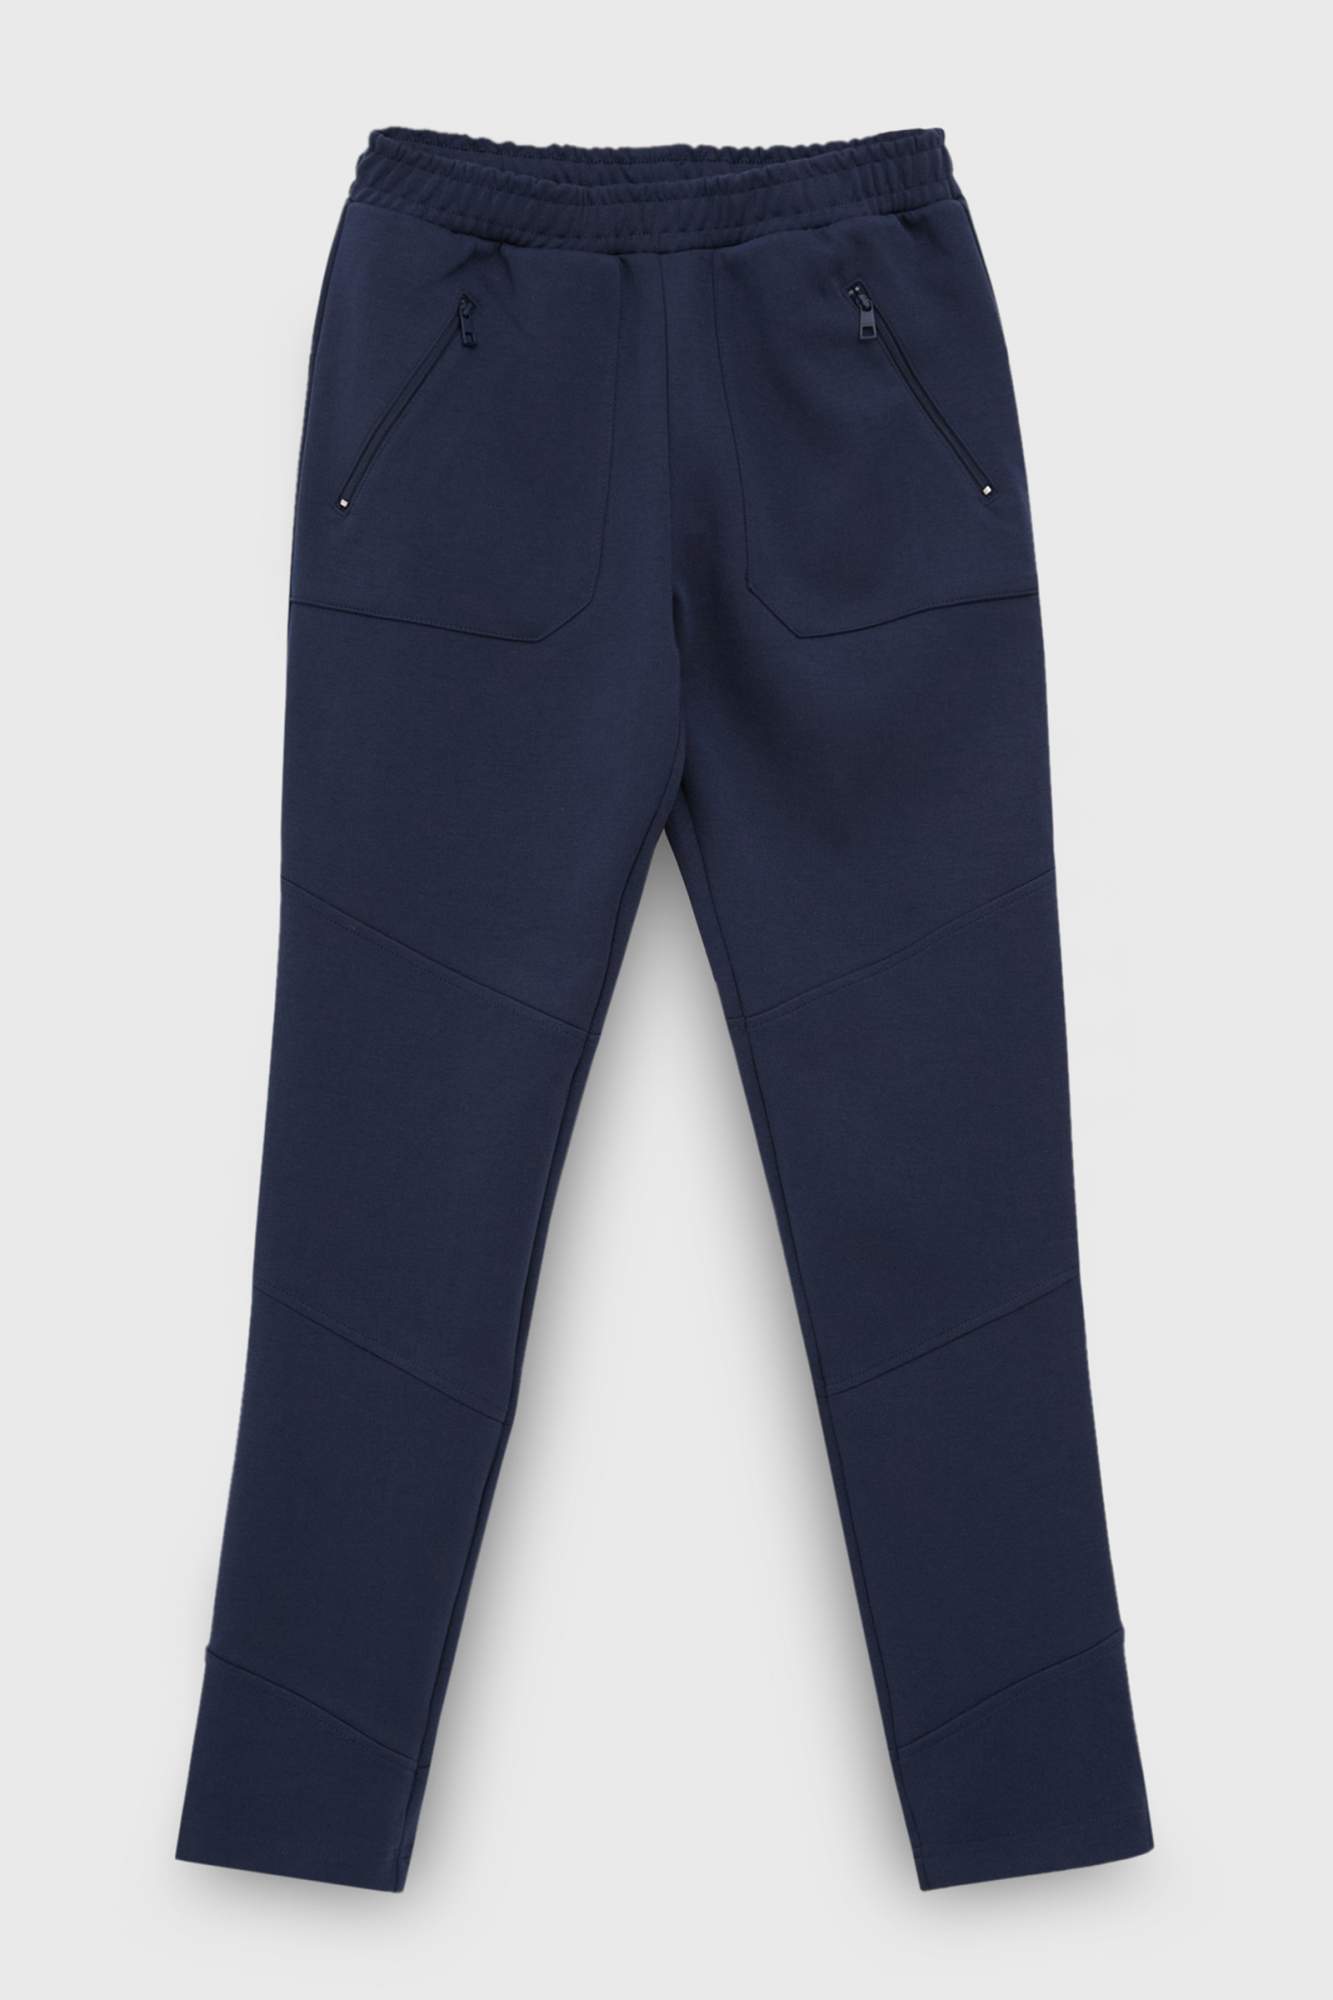 Спортивные брюки женские Finn Flare FBC13075 синие XS